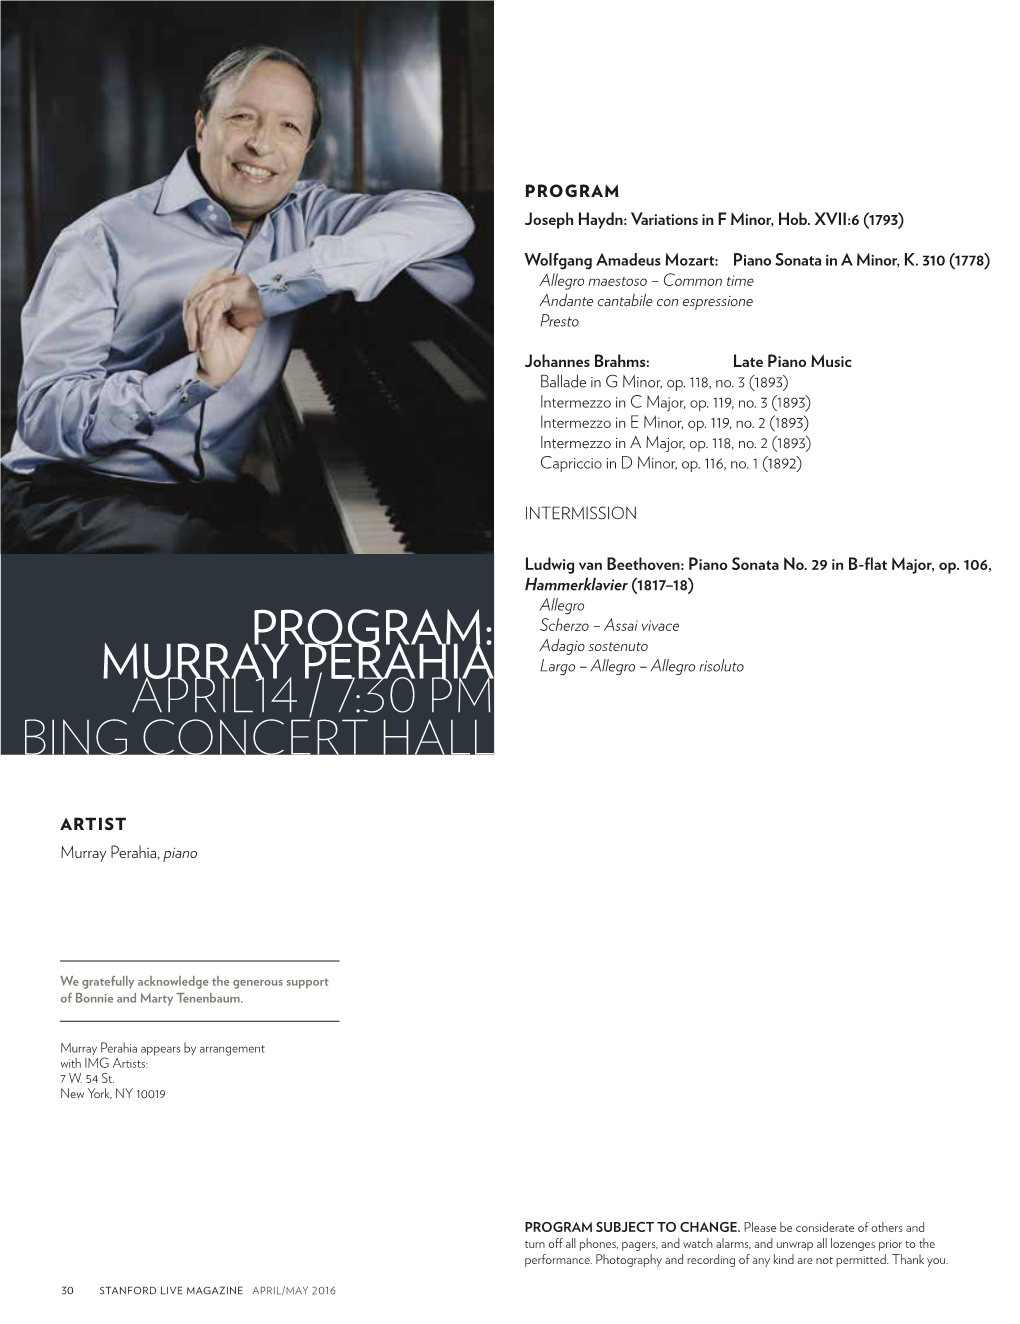 MURRAY PERAHIA Largo – Allegro – Allegro Risoluto APRIL14 / 7:30 PM BING CONCERT HALL